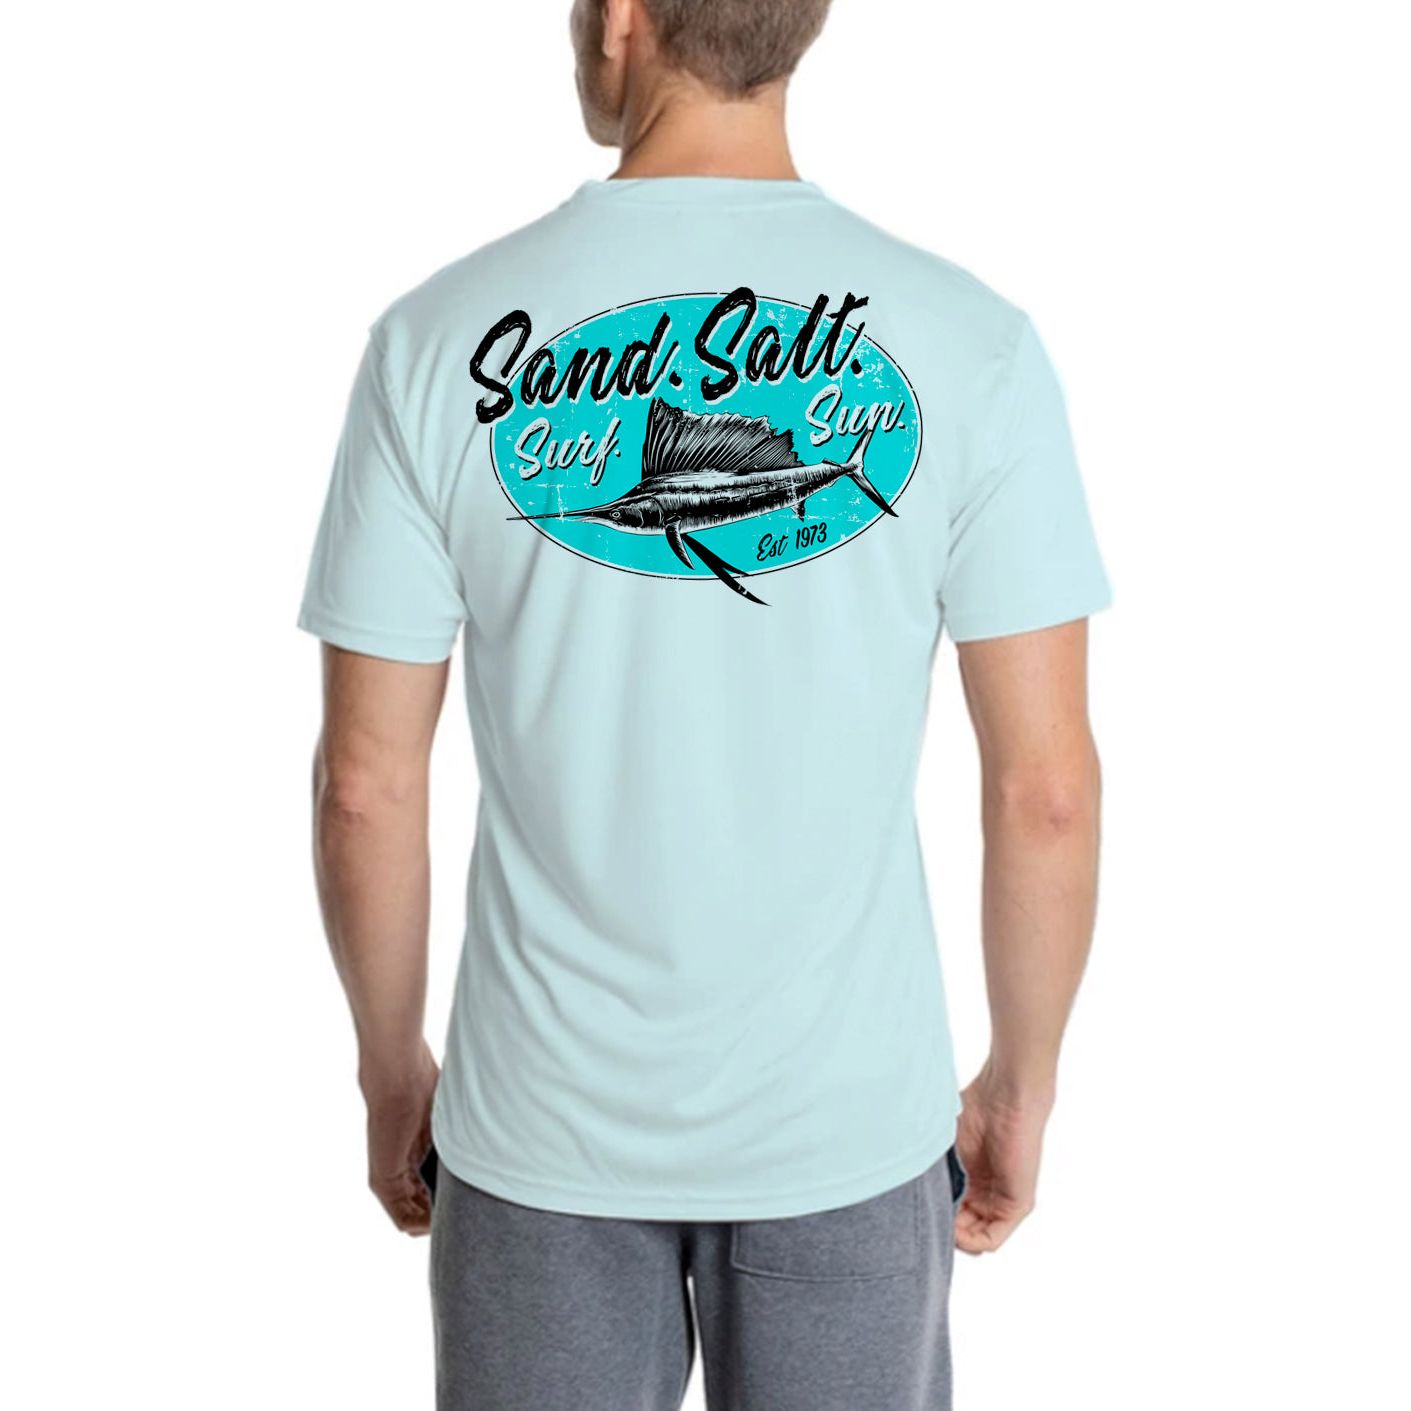 SAND.SALT.SURF.SUN. Marlin Logo Men's UPF 50+ UV Sun Protection Performance Short Sleeve T-Shirt X-Large / Arctic Blue